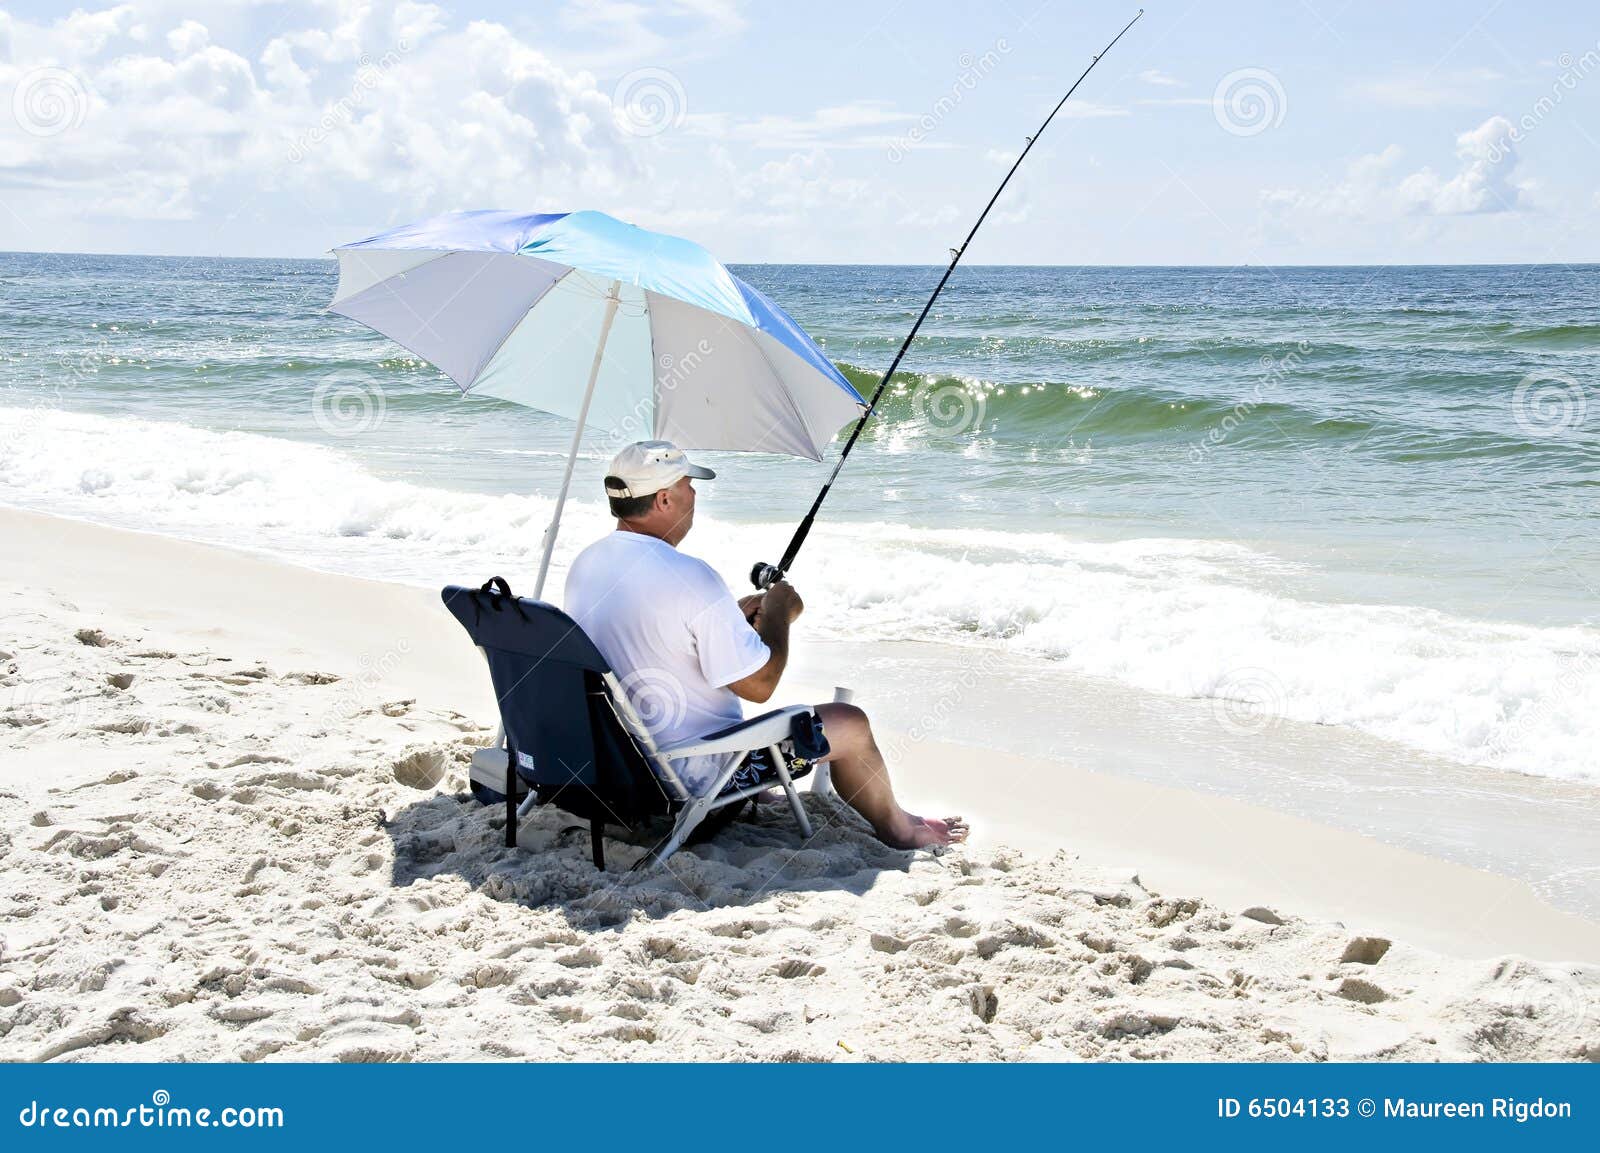 https://thumbs.dreamstime.com/z/fishing-beach-6504133.jpg